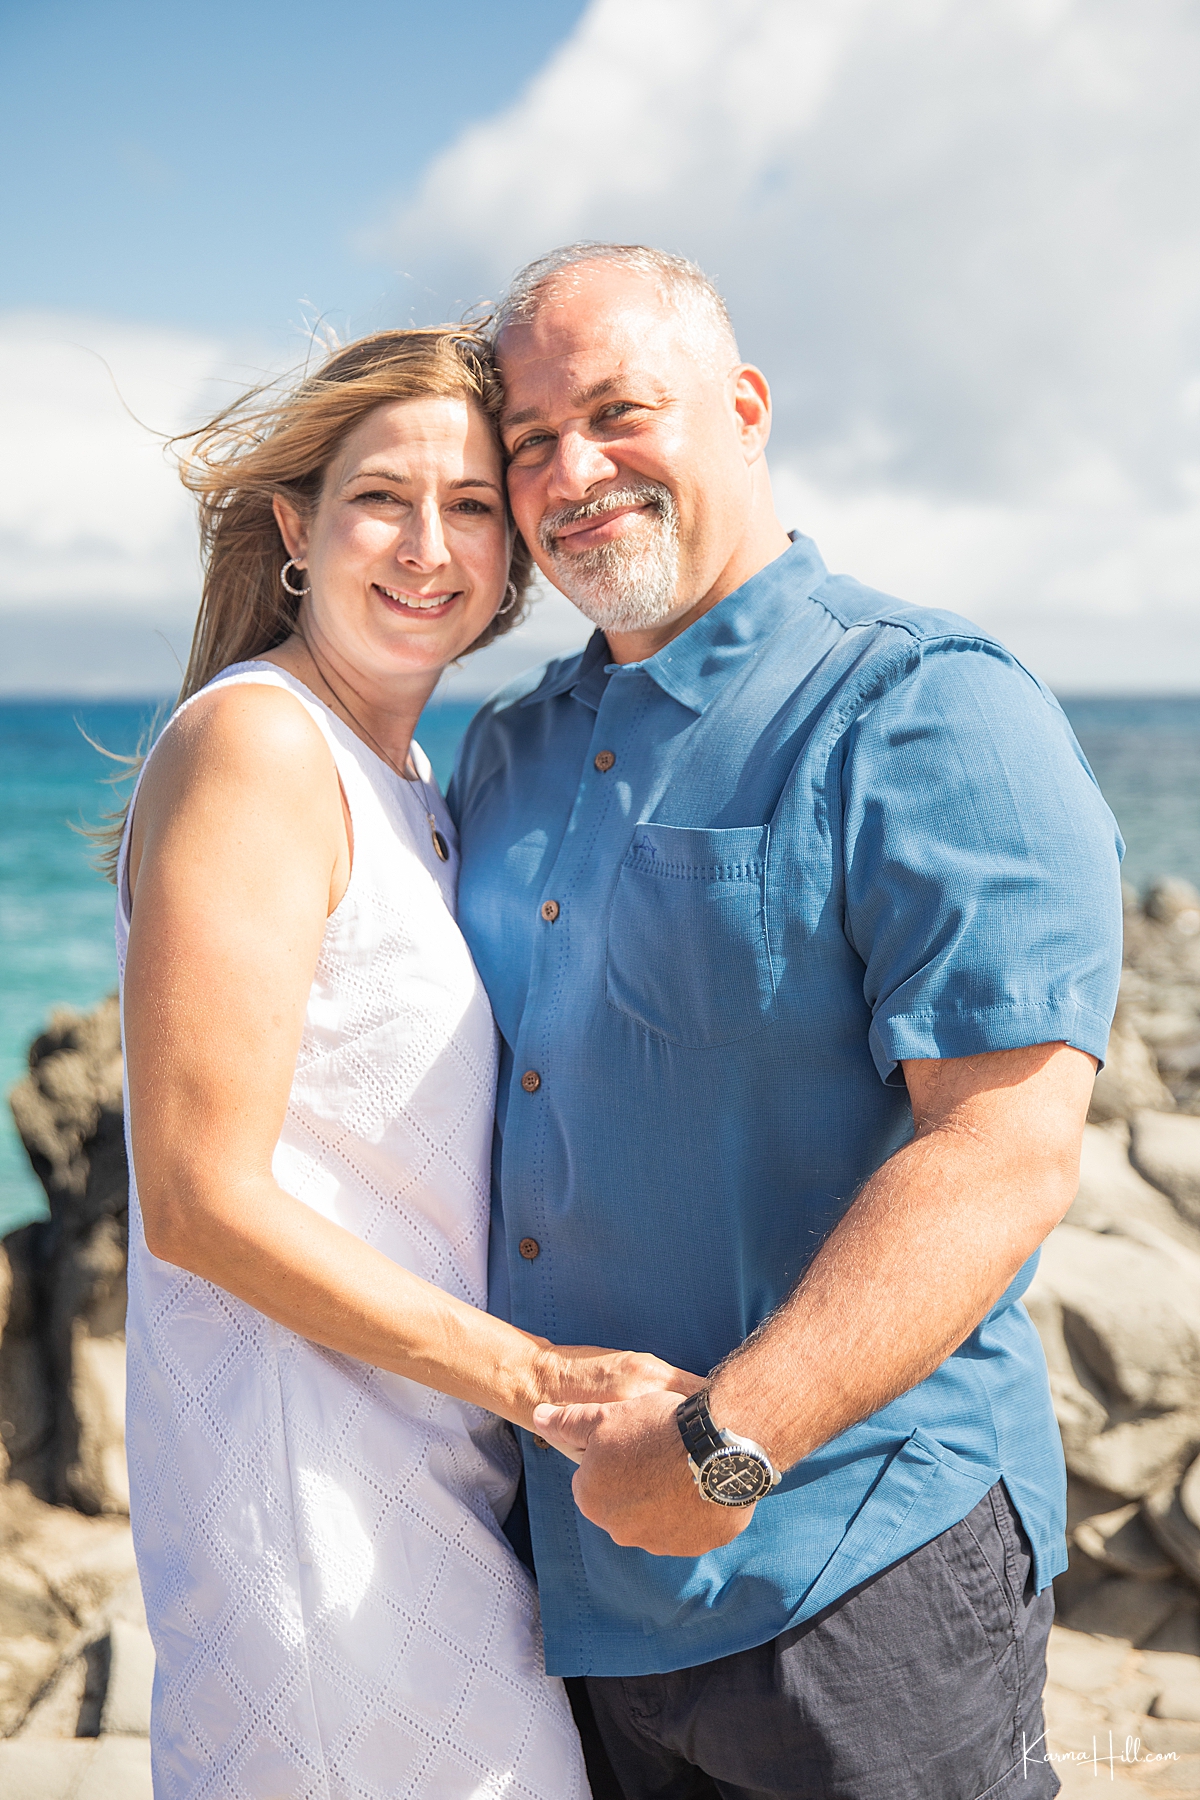 Hawaii Beach Portraits for Couples